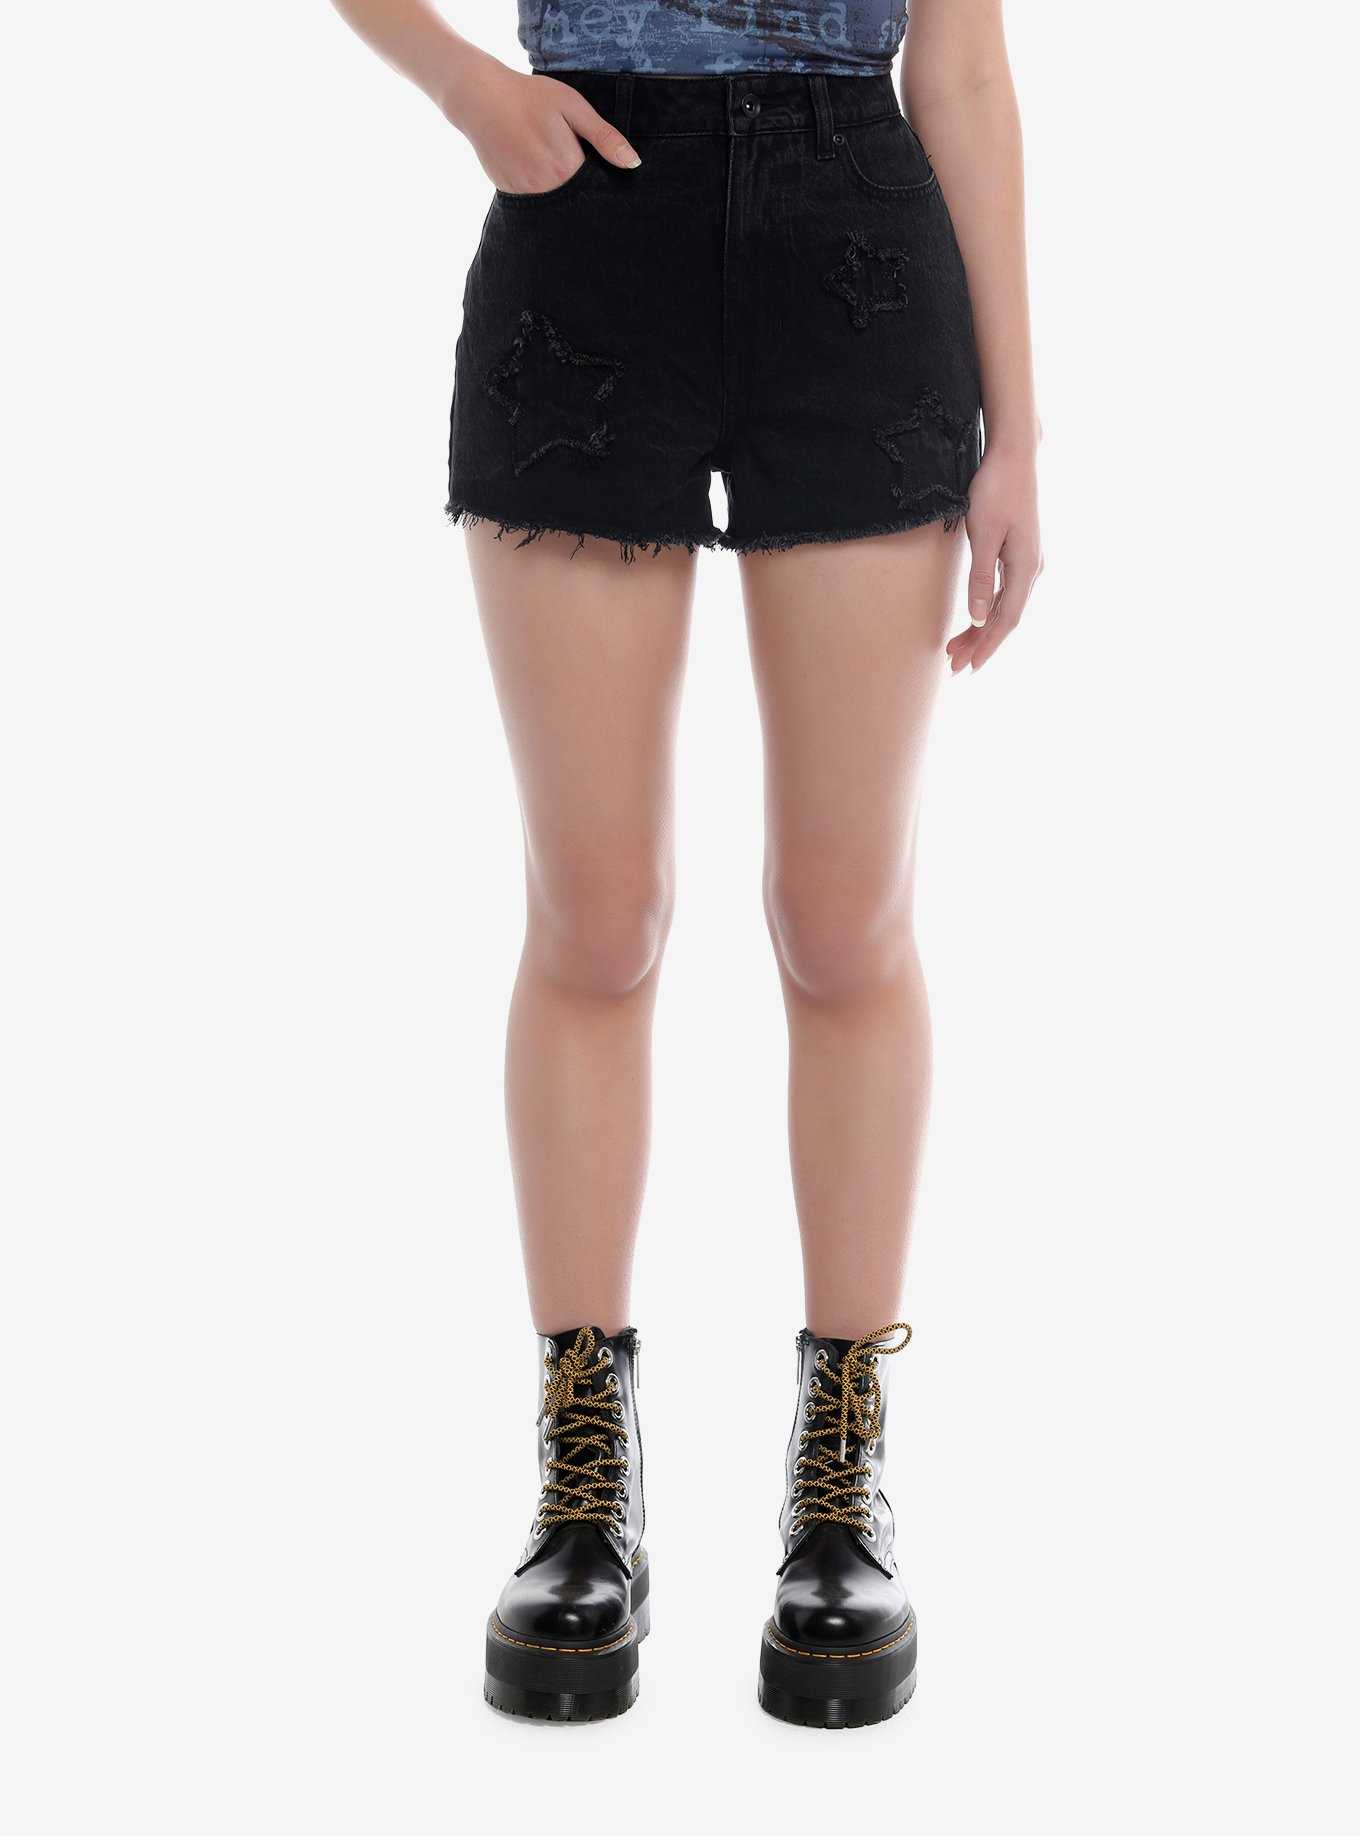 Shorts for Women: Denim, Cargo & Black Shorts